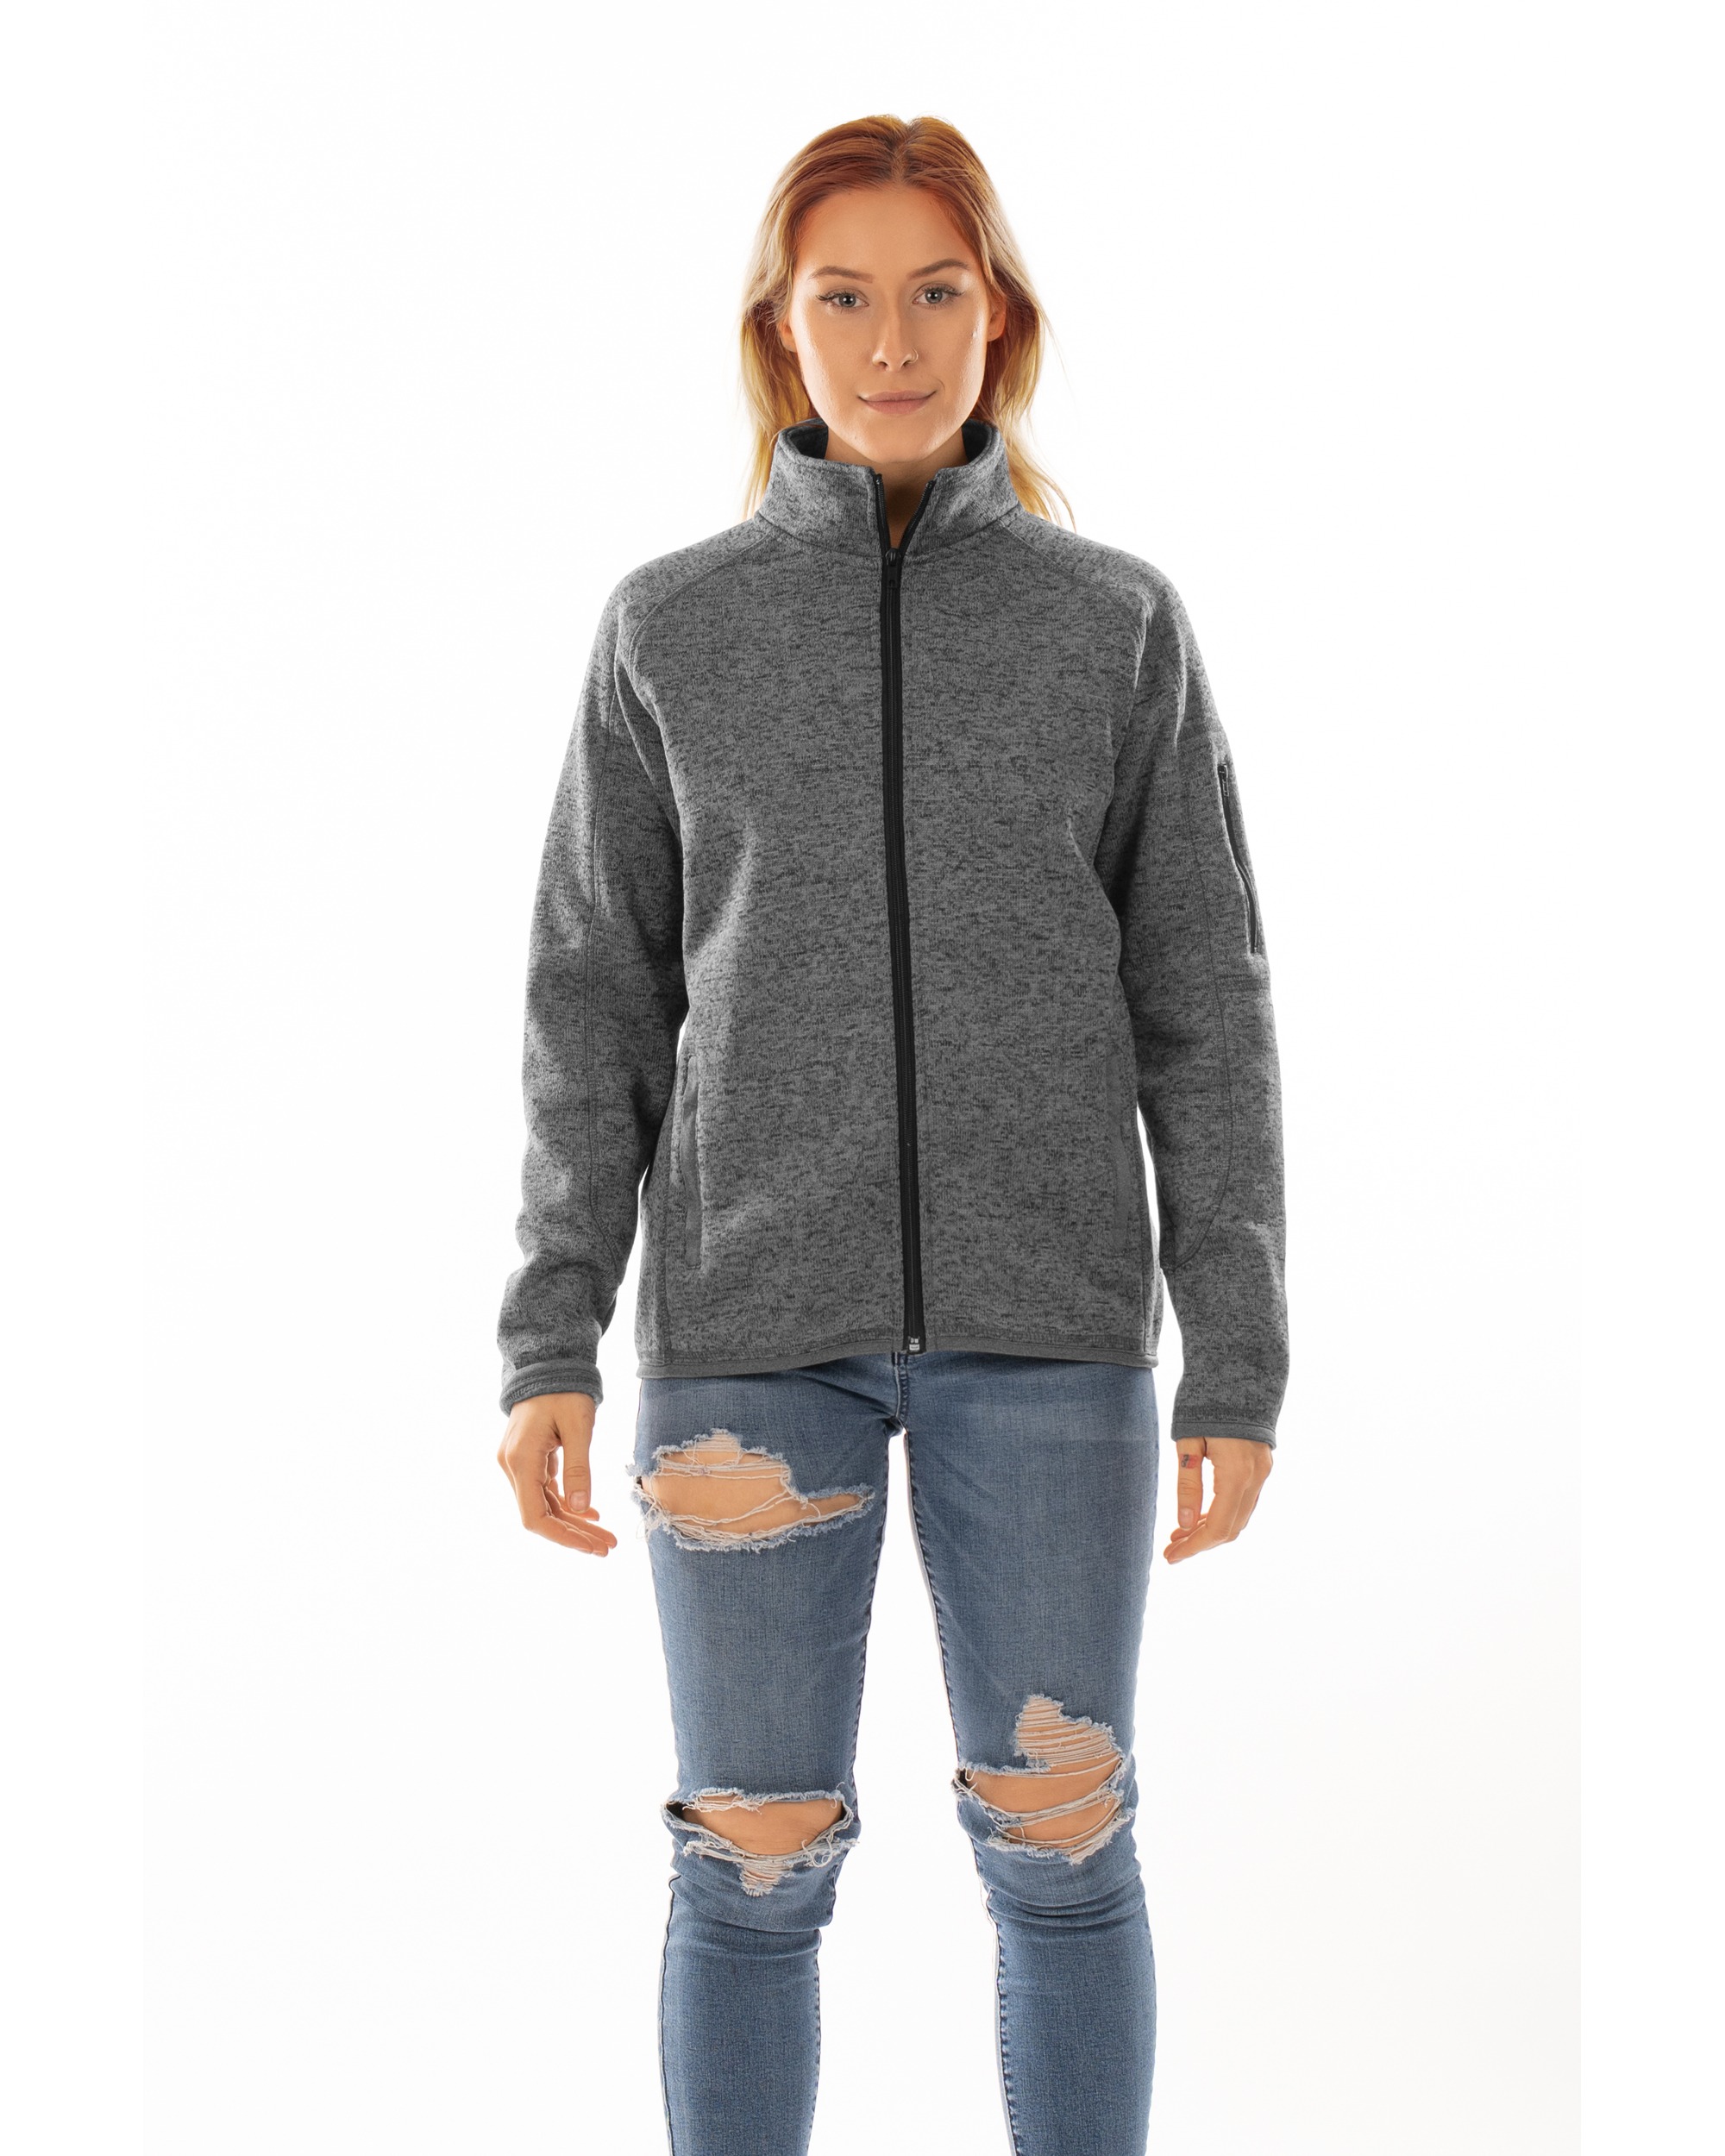 Burnside® B5901 Ladies Sweater Knit Jacket